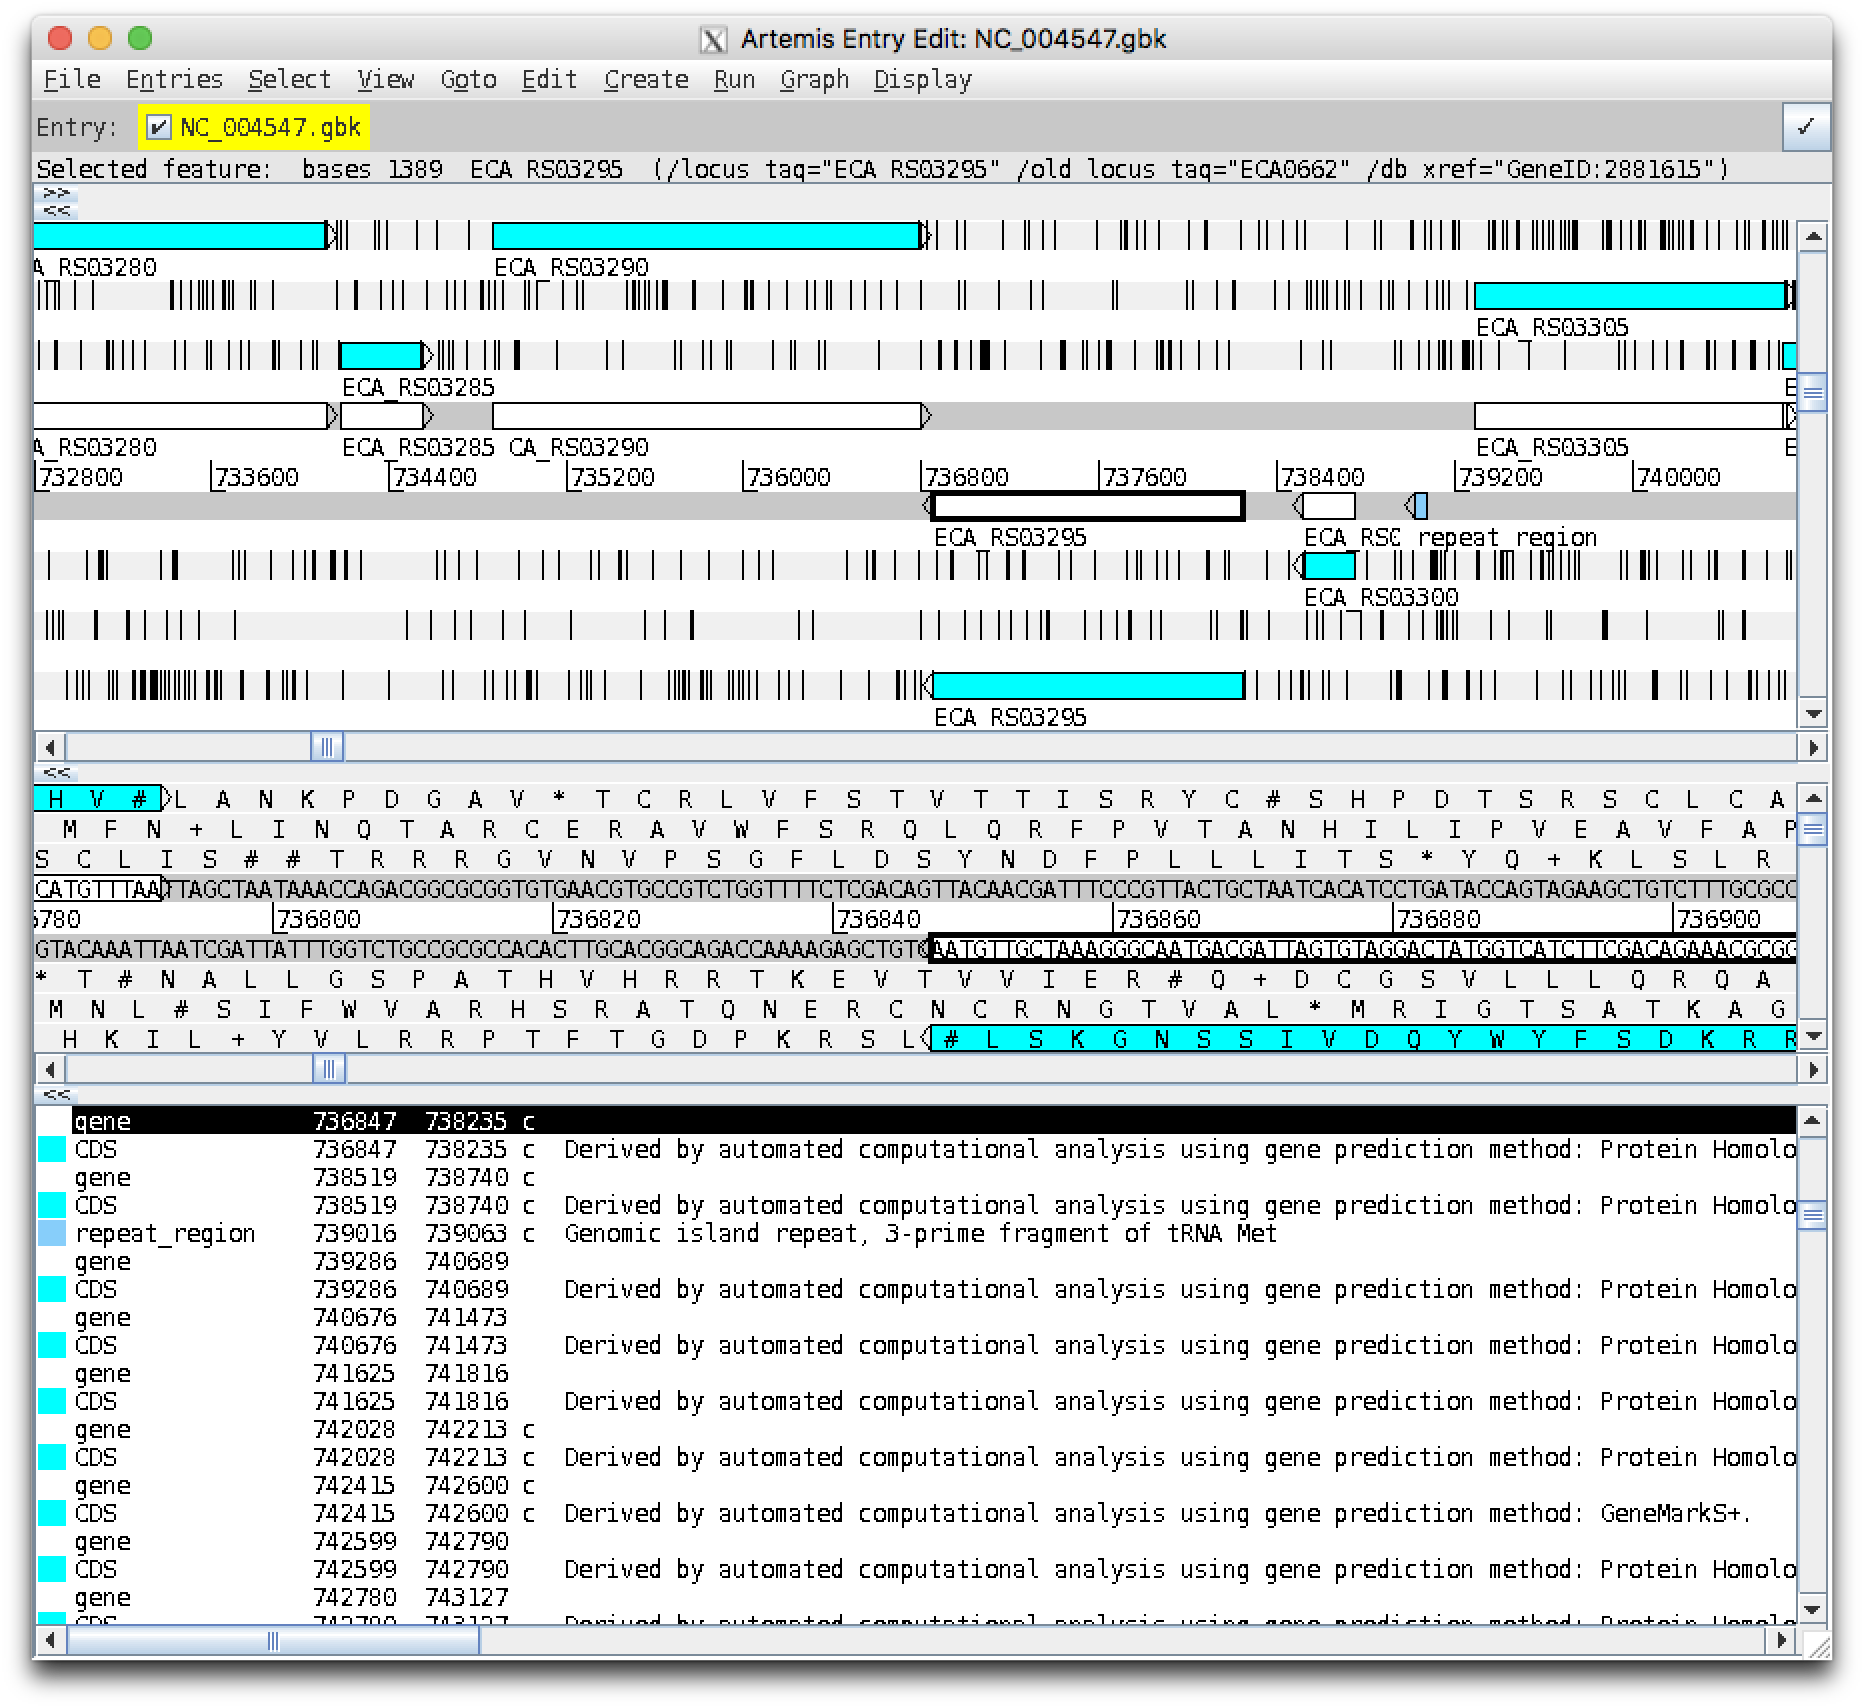 Artemis with NC_004547.gbk loaded showing ECA0662 gene